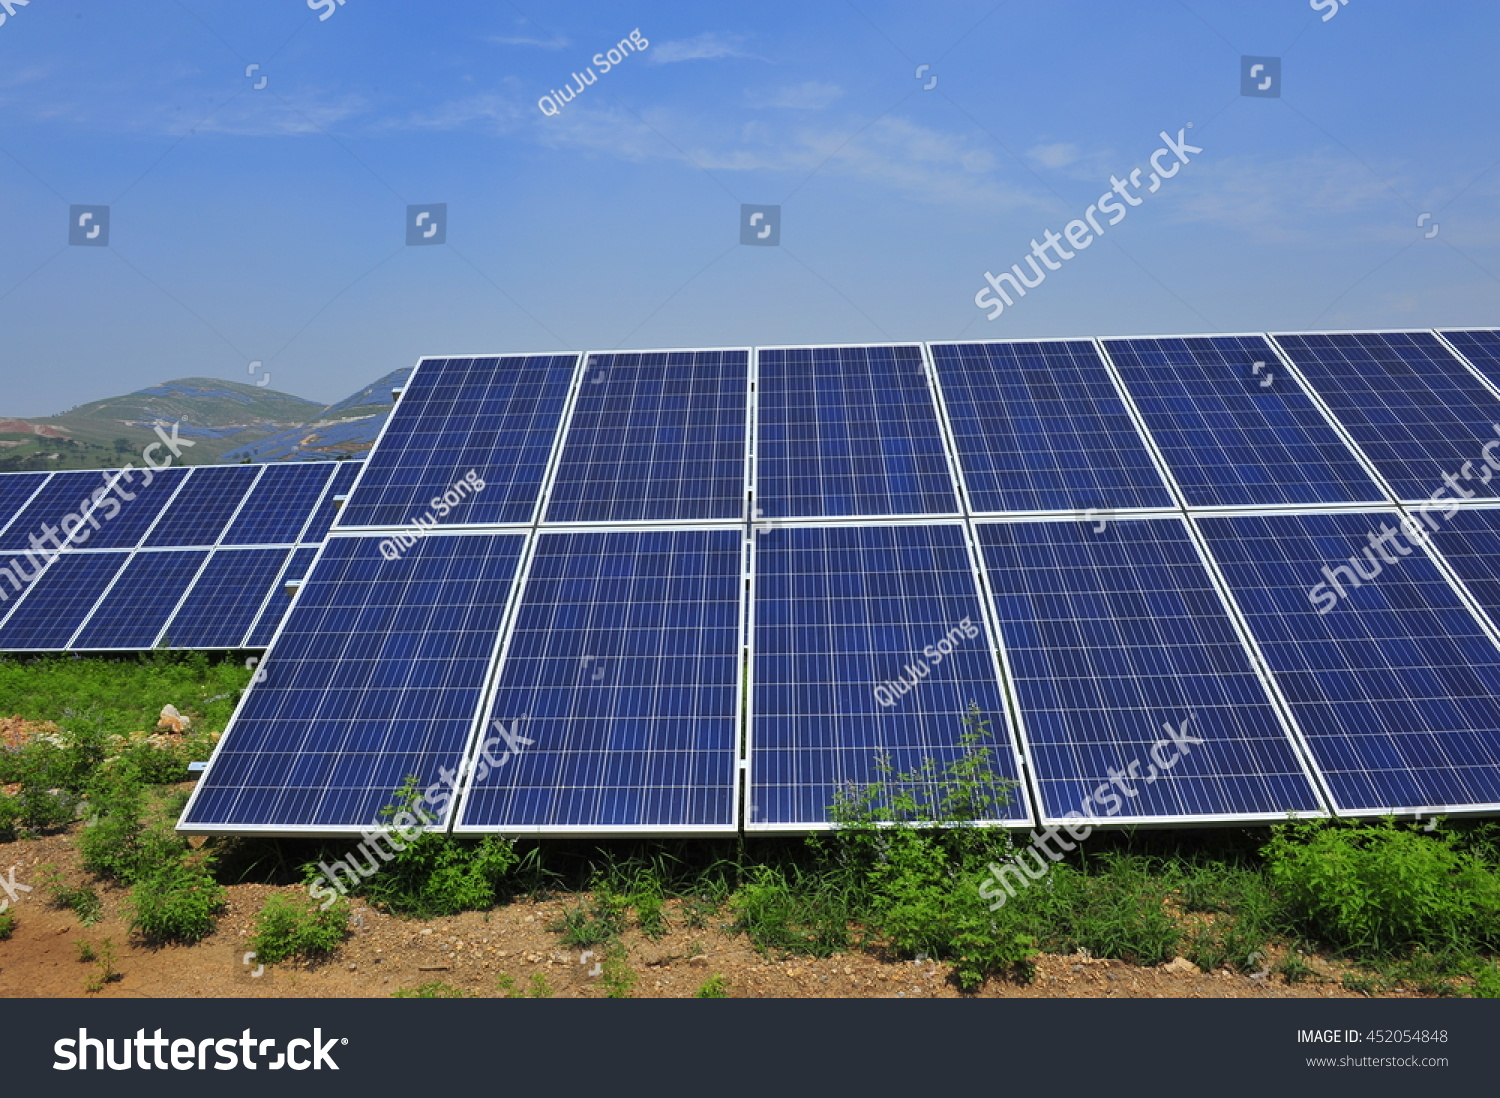 Solar Power Equipment Stock Photo 452054848 : Shutterstock